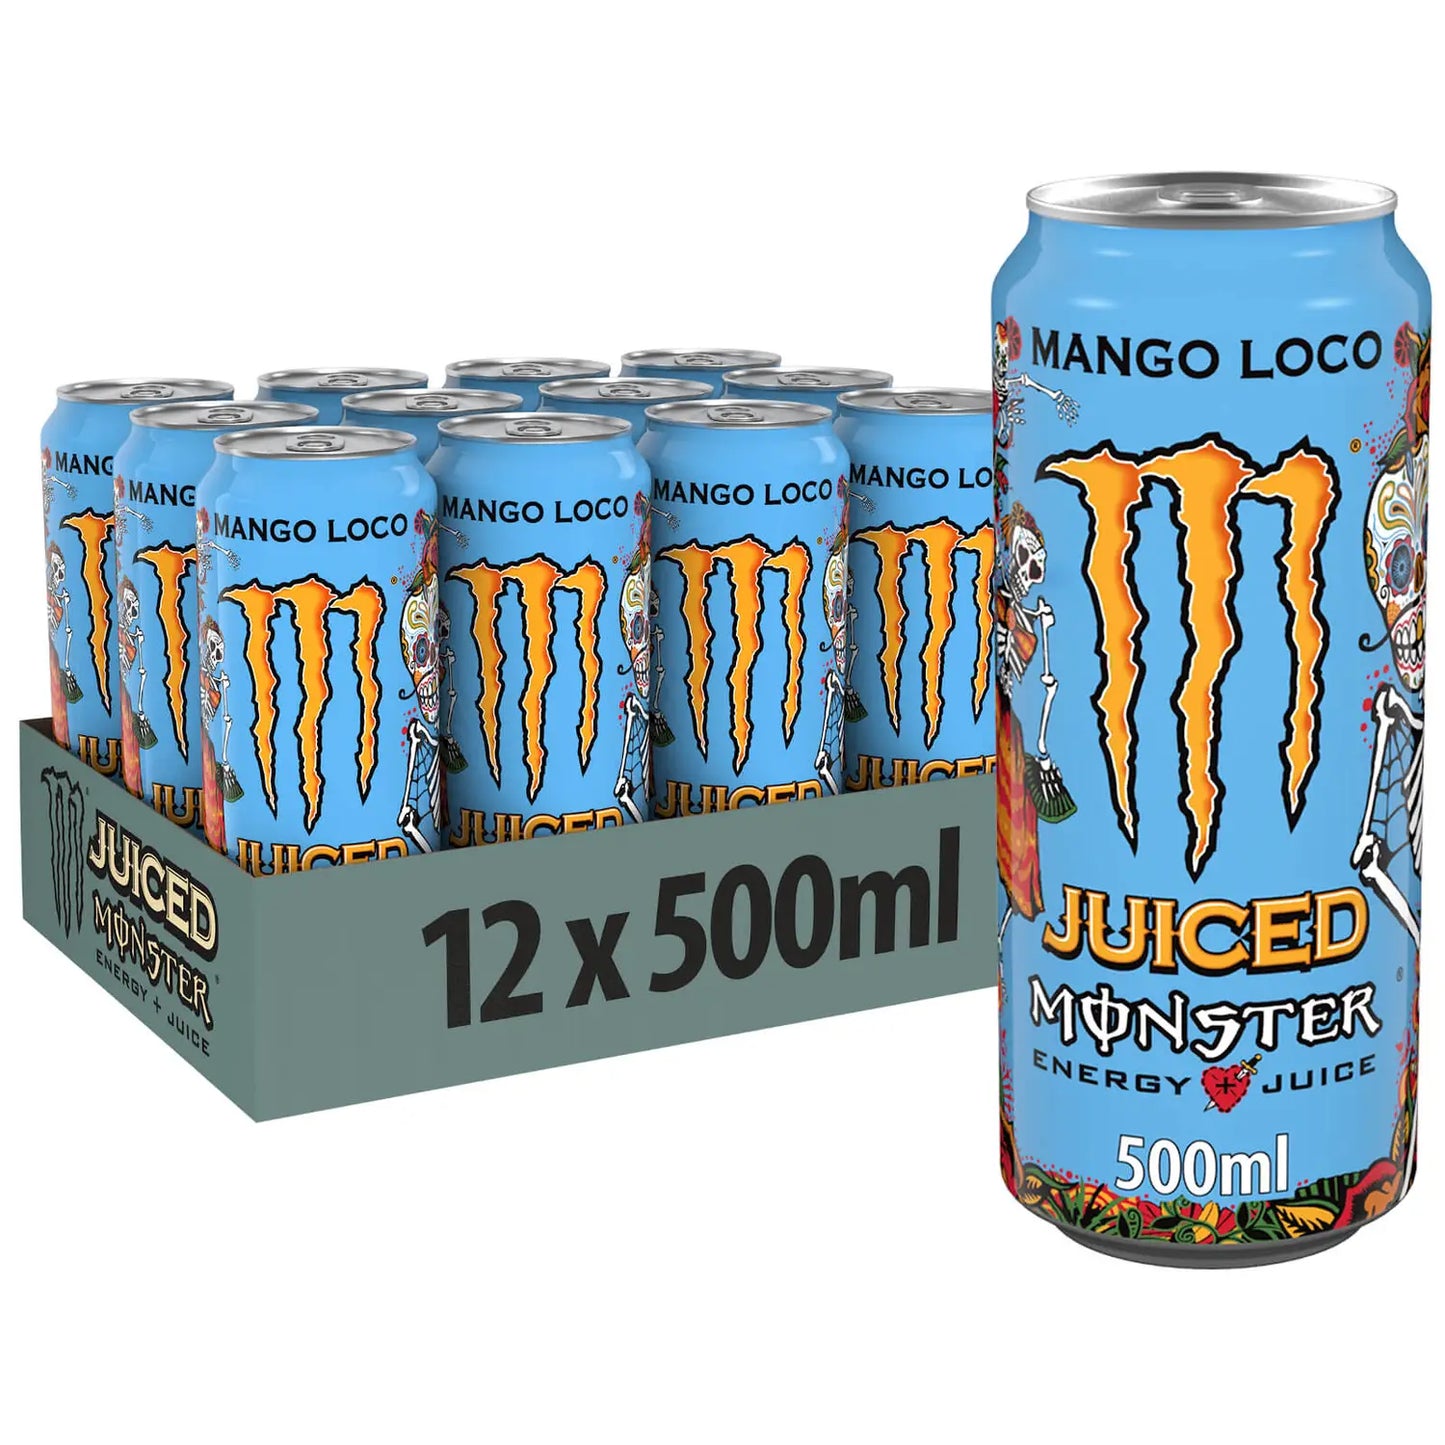 Monster Mango Loco Energy Drink 12 x 500ml